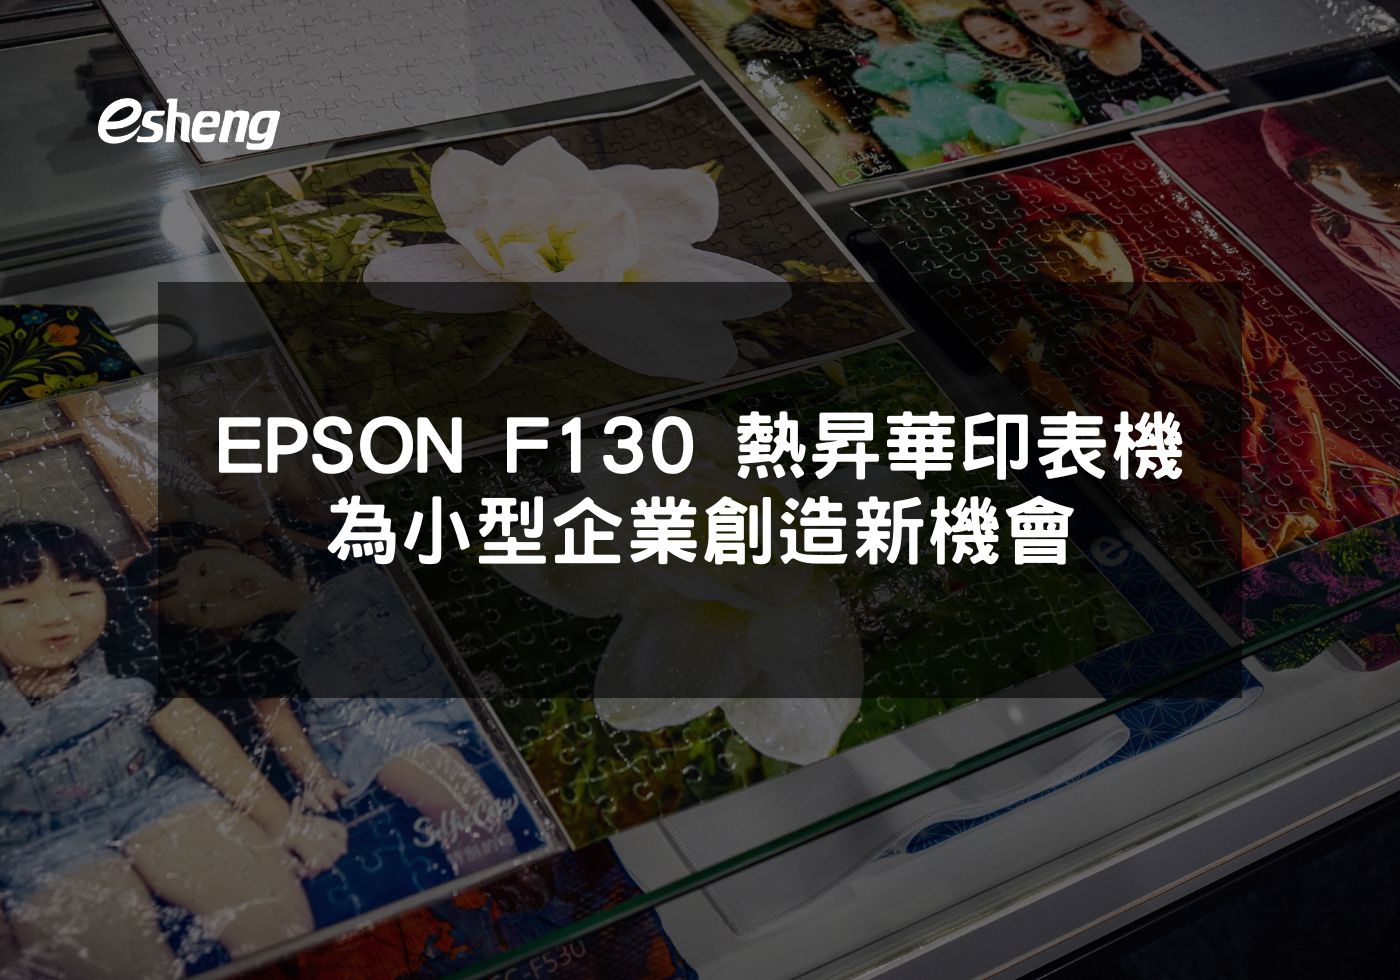 EPSON F130熱昇華印表機為小型企業提供高效解決方案